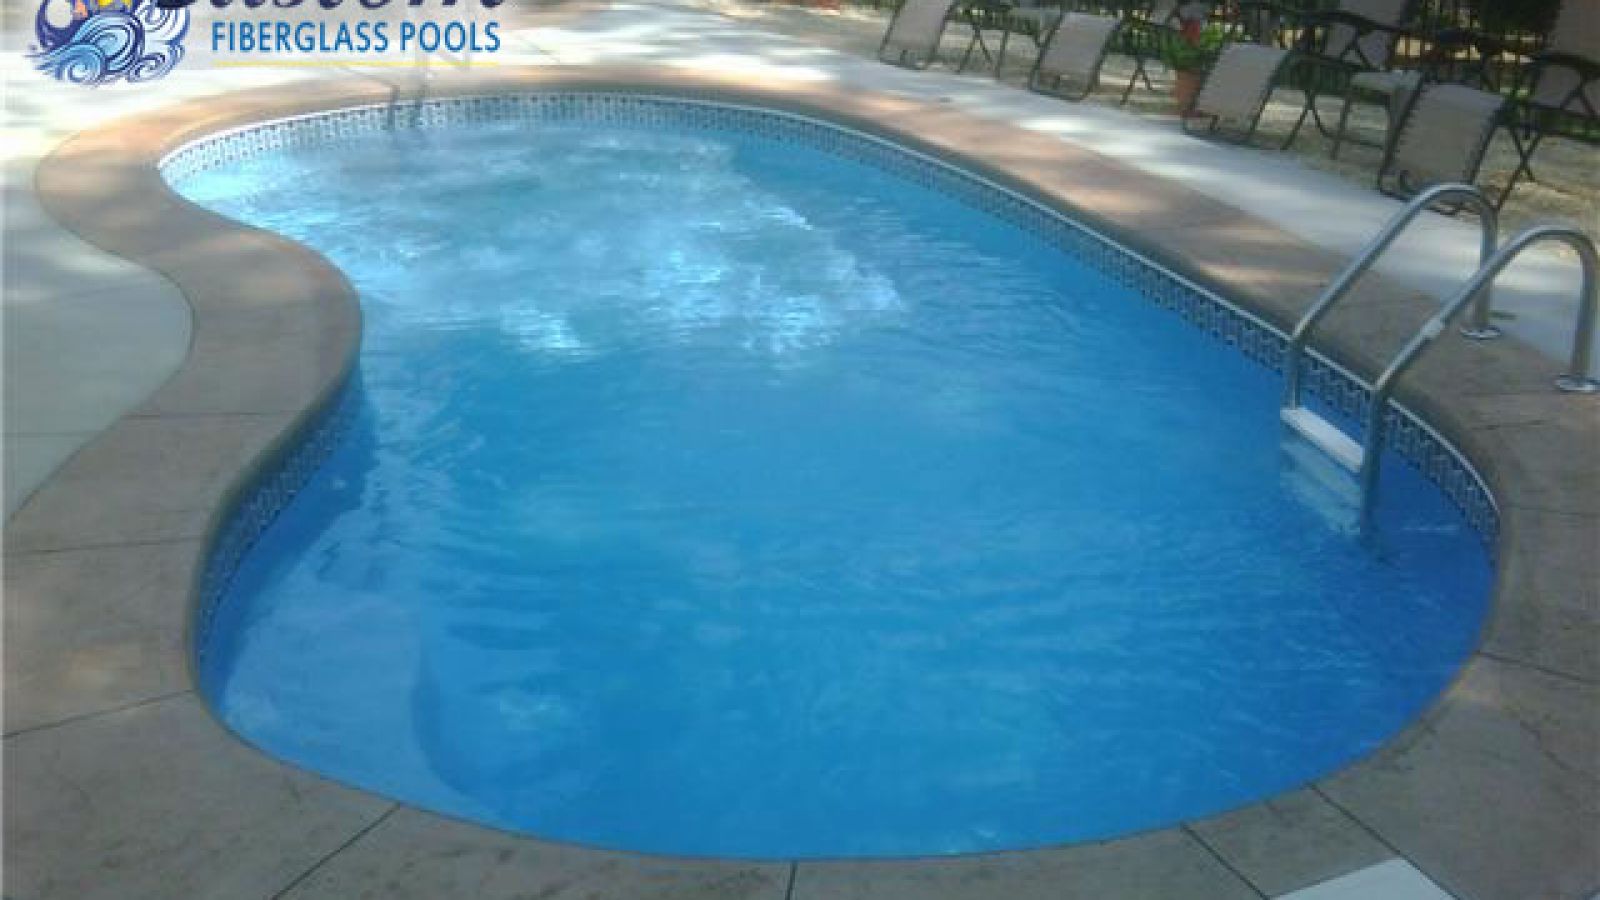 Caspian Kidney Fiberglass Pool adding playful charm to a Clarksville, TN backyard